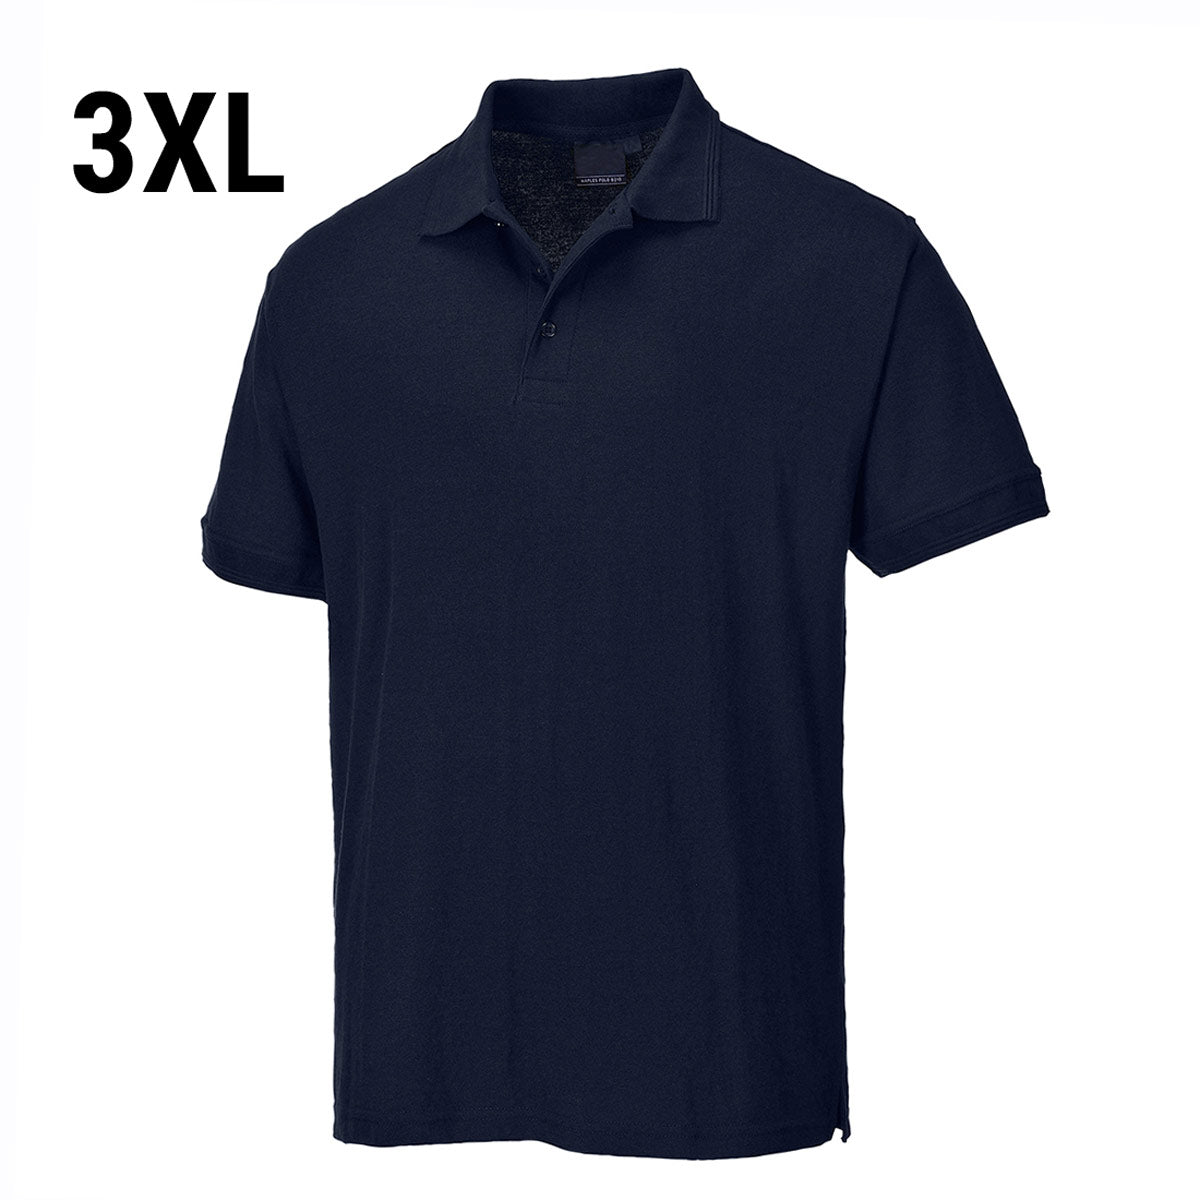 Poloskjorte til mænd - Dark Navy - Størrelse: 3XL